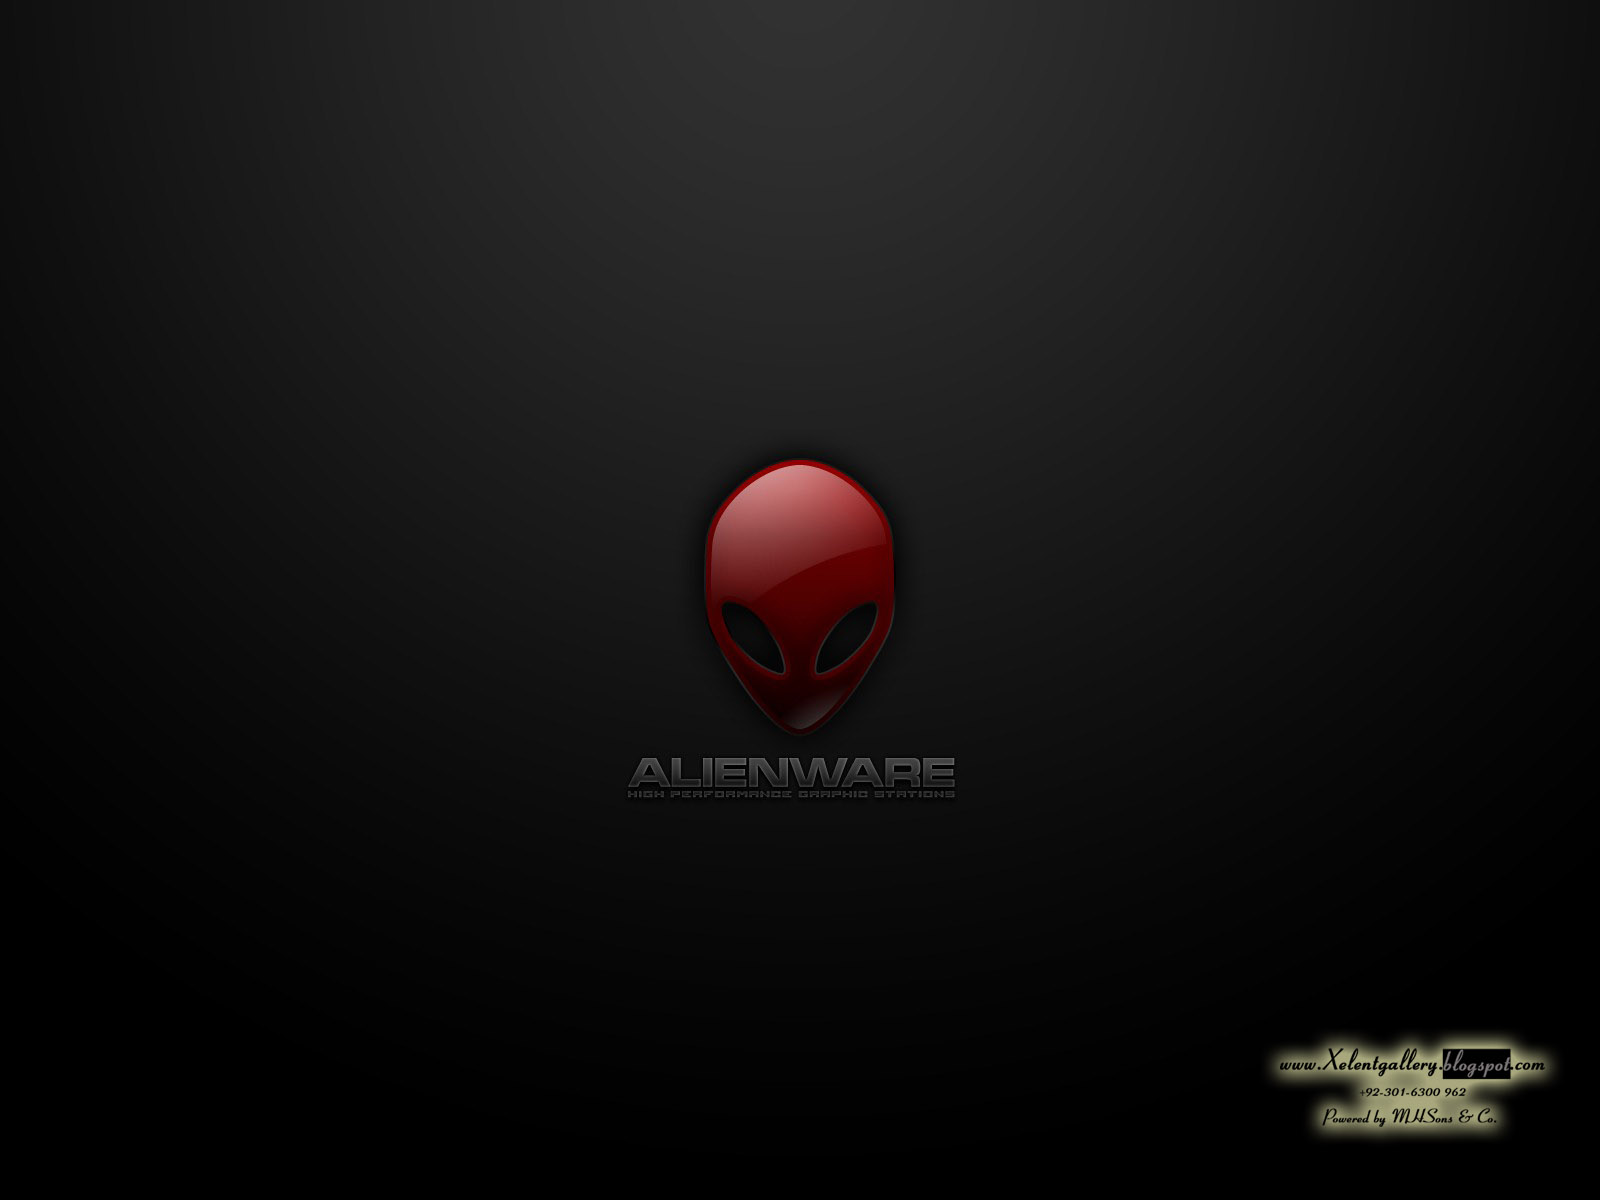 Alienware Desktop Themes For Vista Wallpaper Picswallpaper